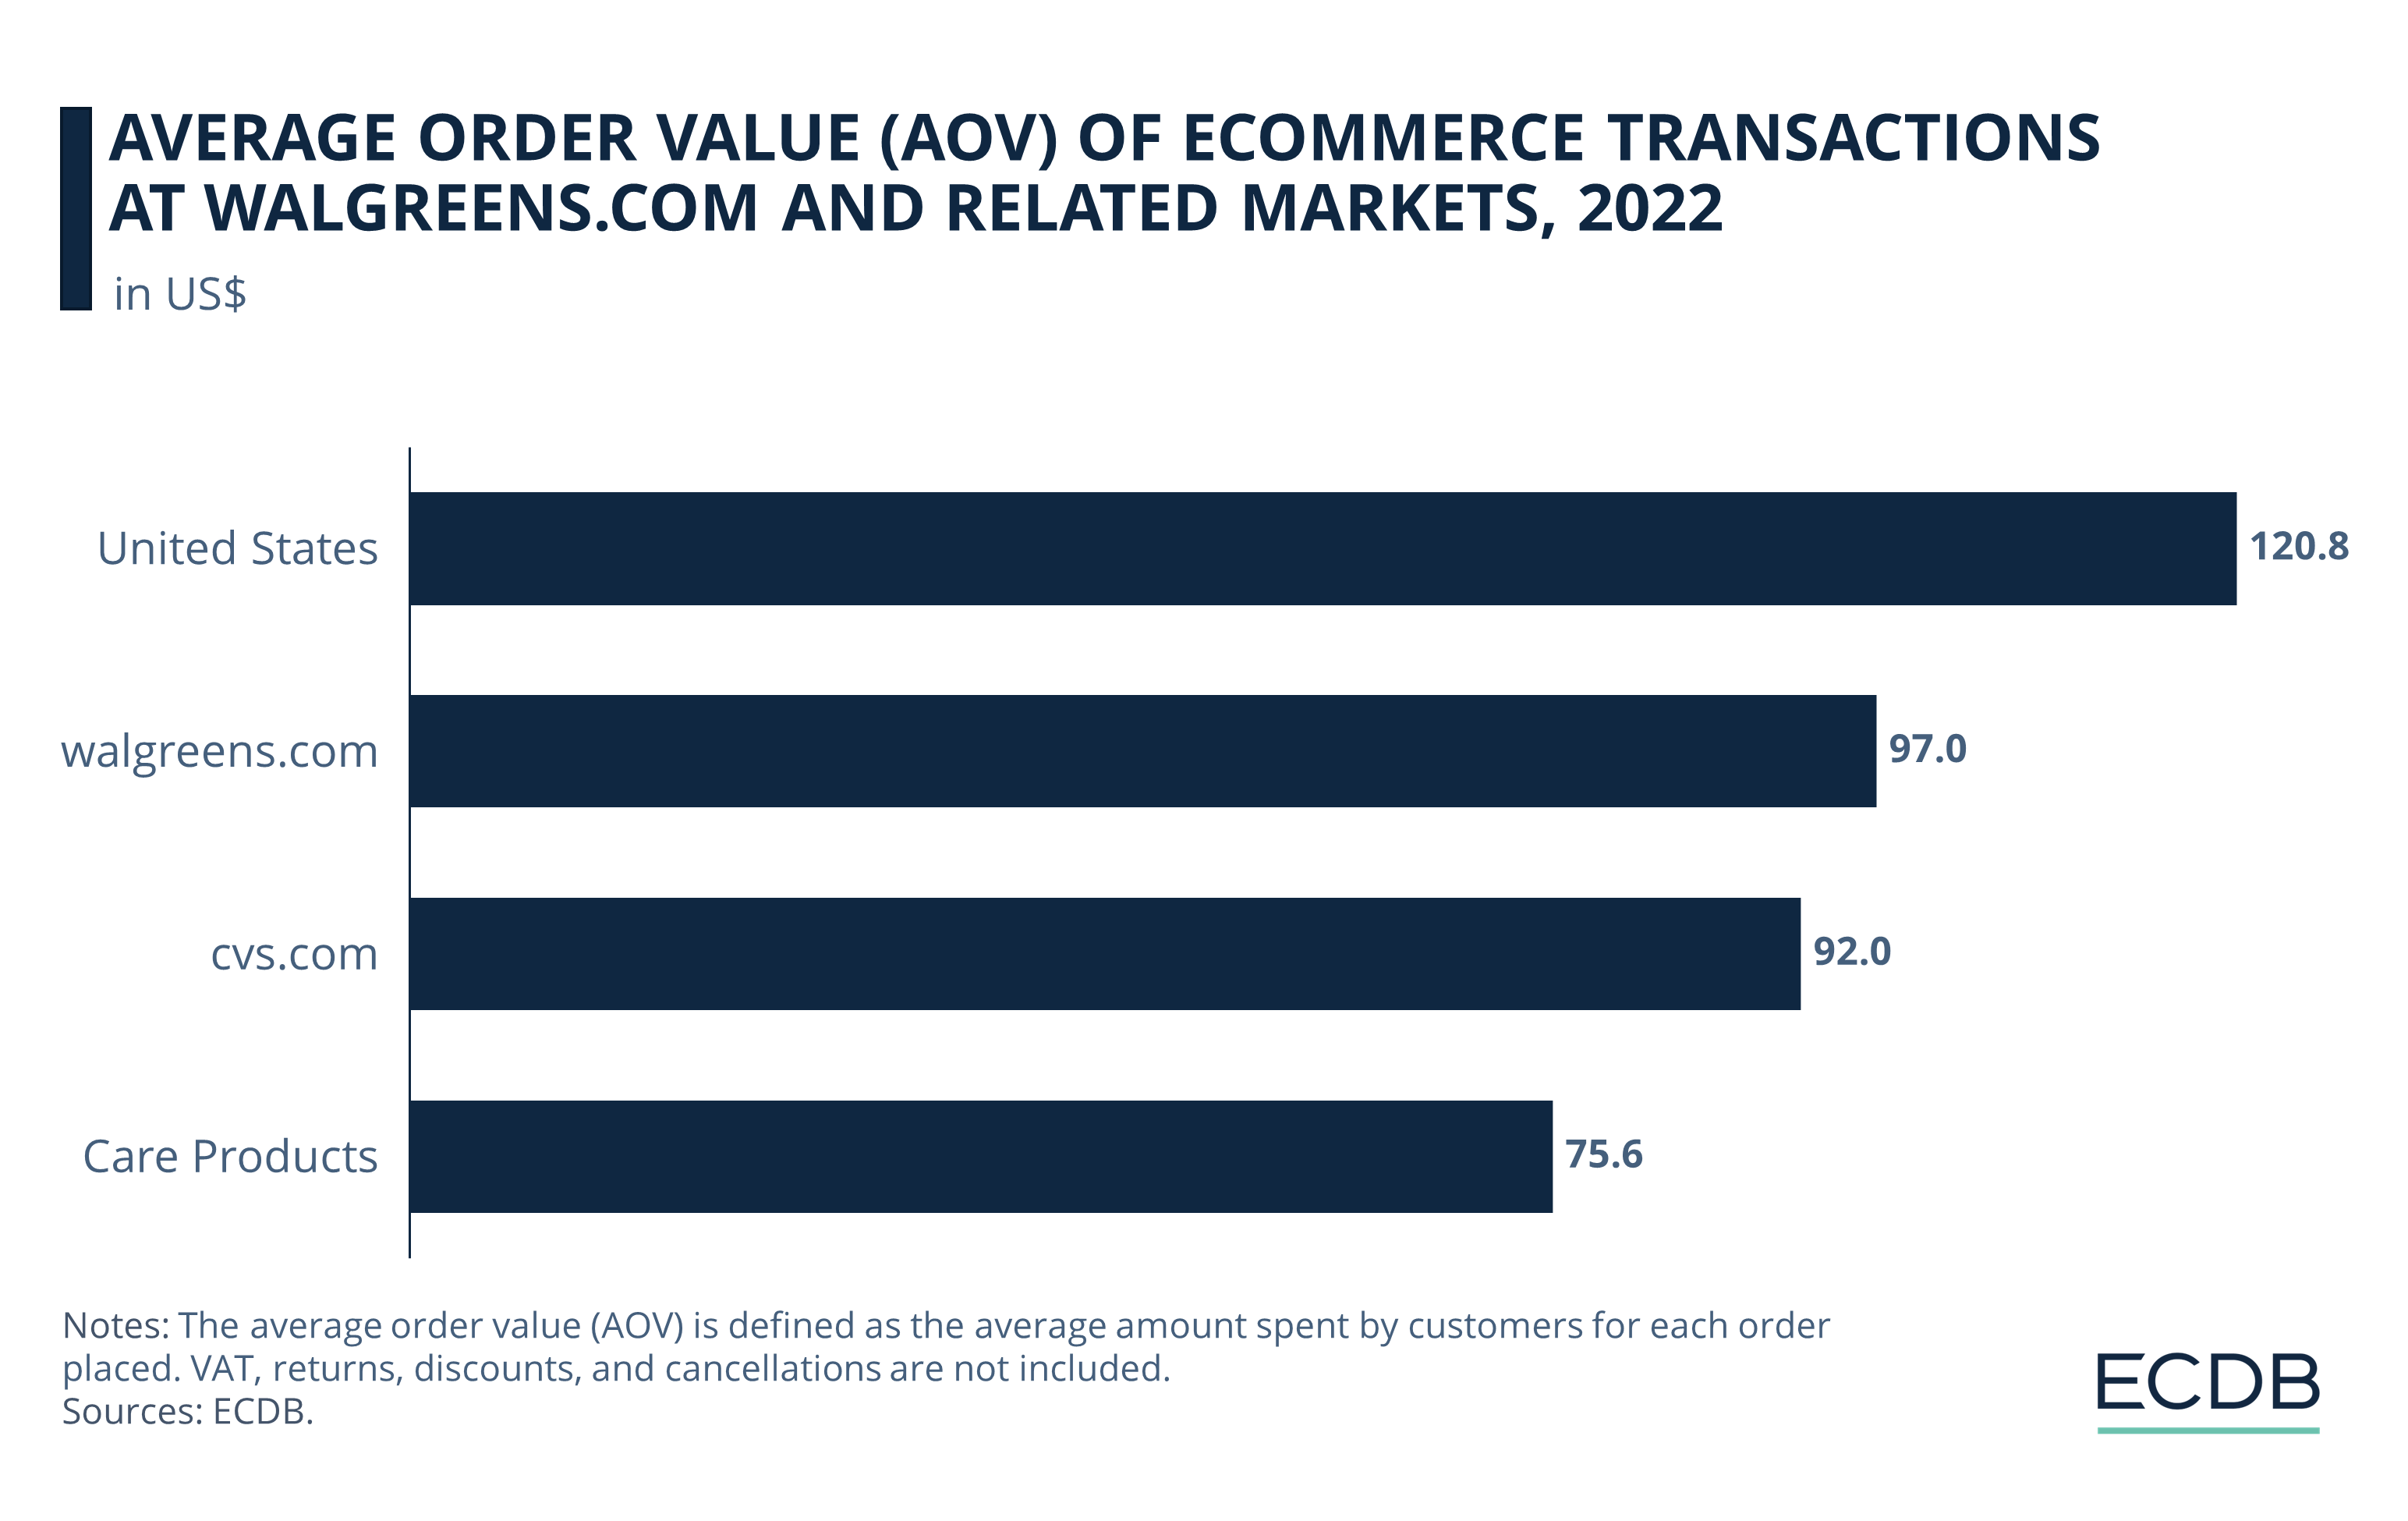 Average Order Value of eCommerce Transactions at Walgreens.com, 2022